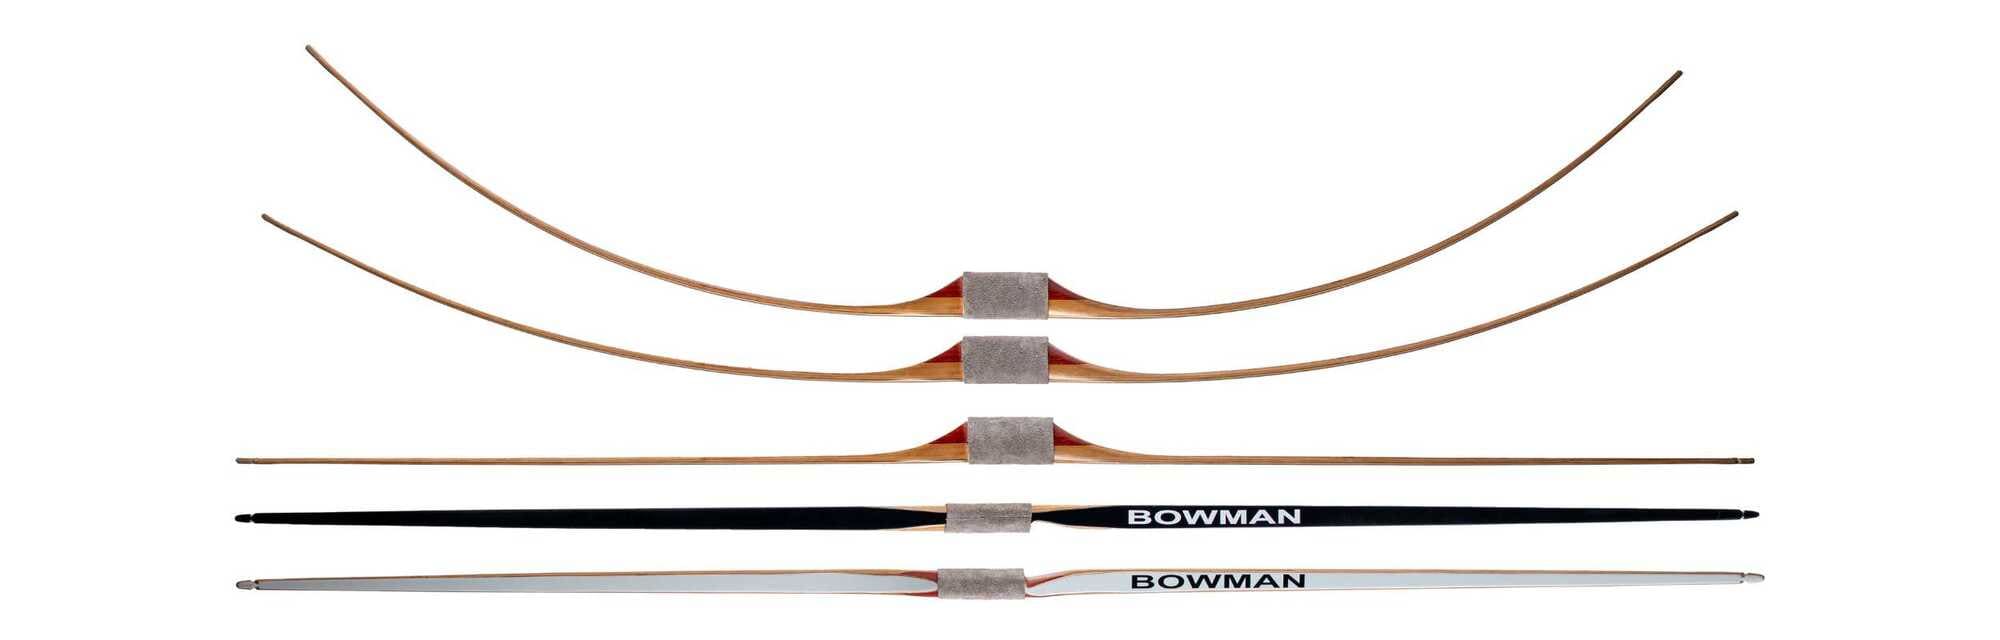 The Bowman Bow